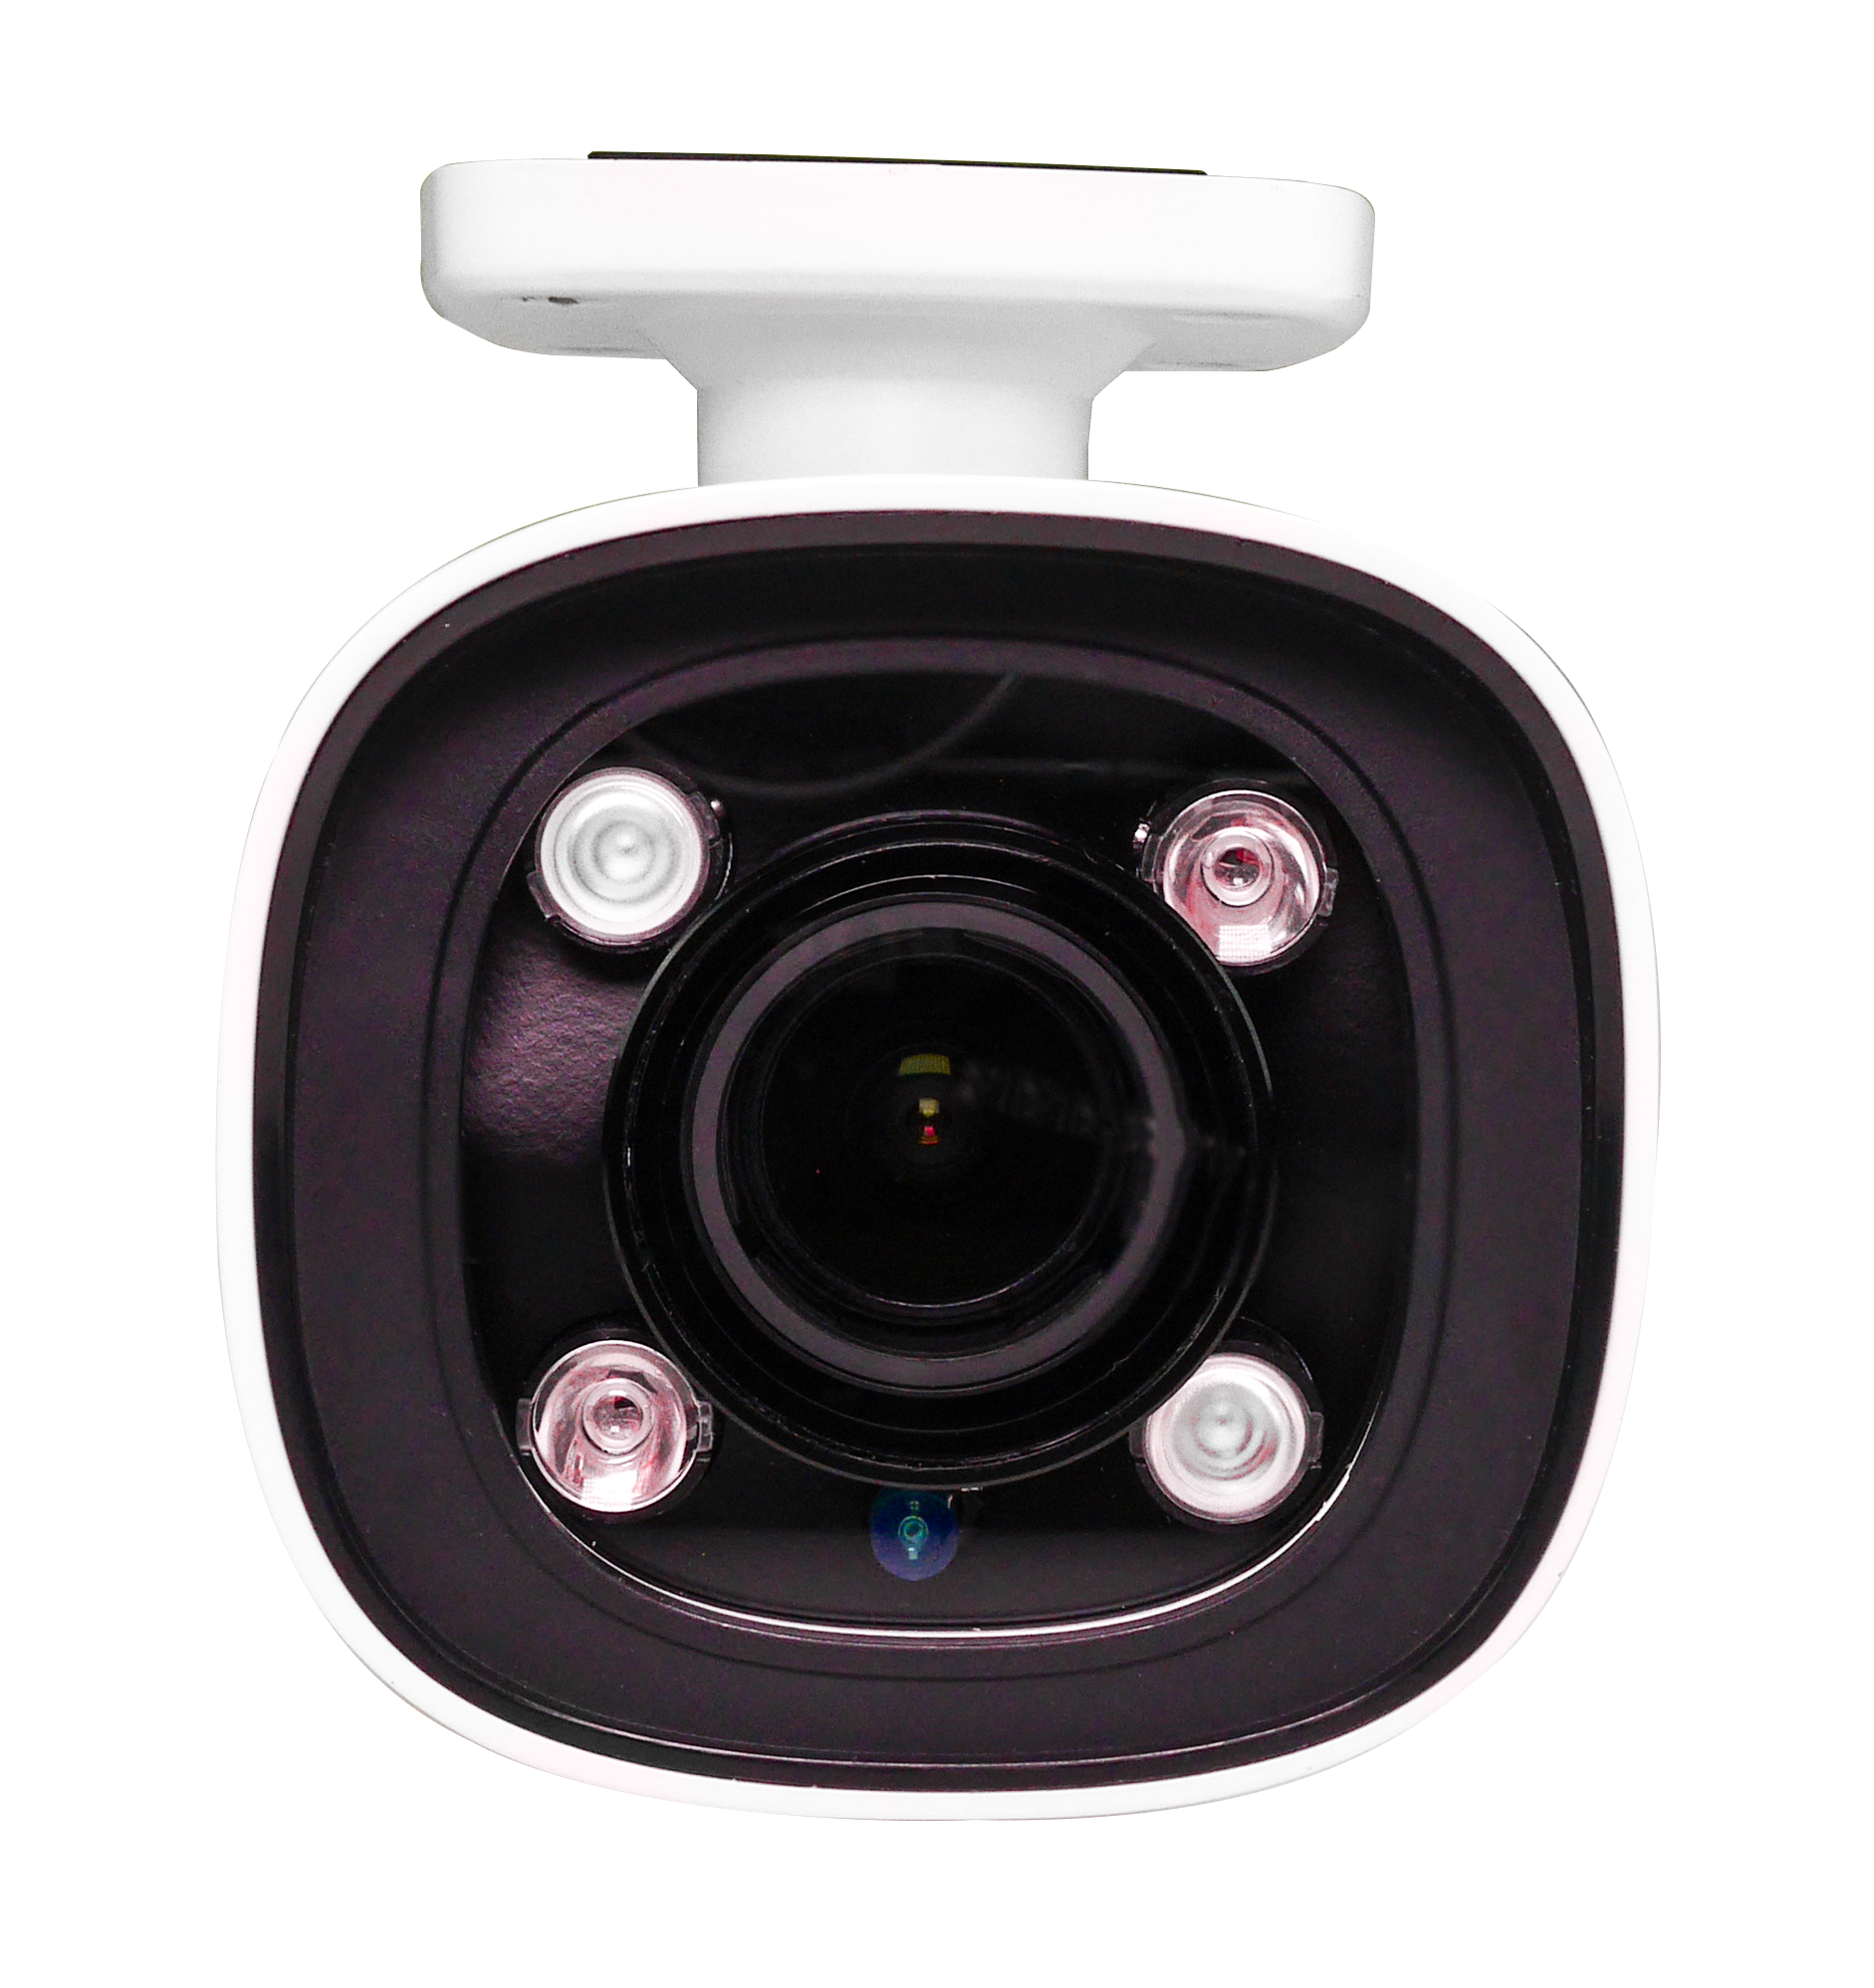 IP камера TRASSIR TR-D2123WDIR6 с подсветкой до 60 м и вариообъективом